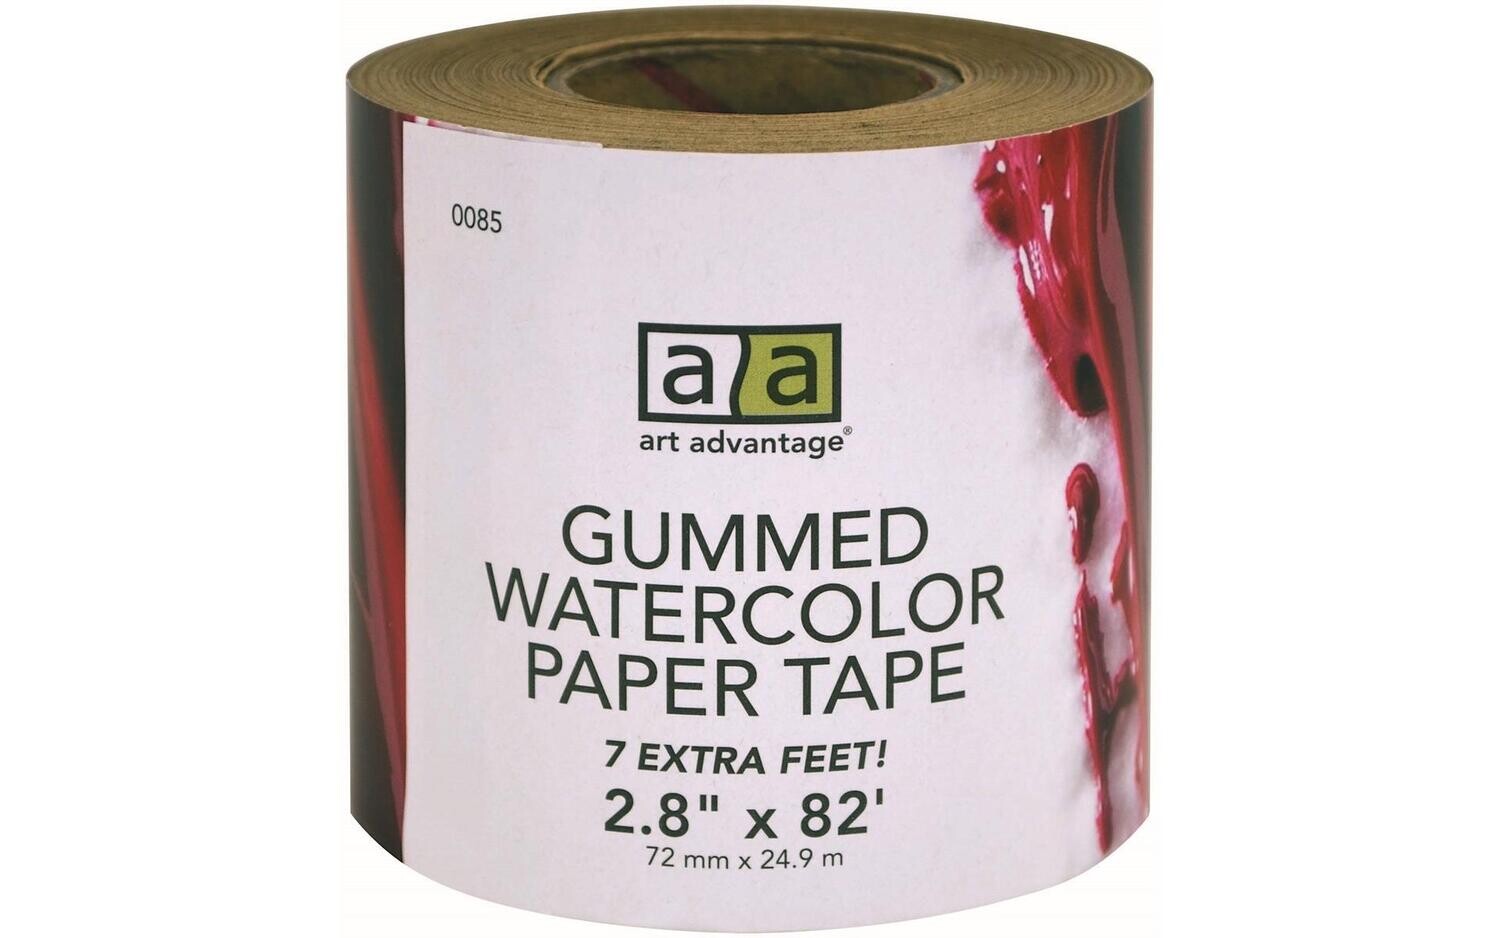 Art Advantage Gummed Watercolor Paper Tape